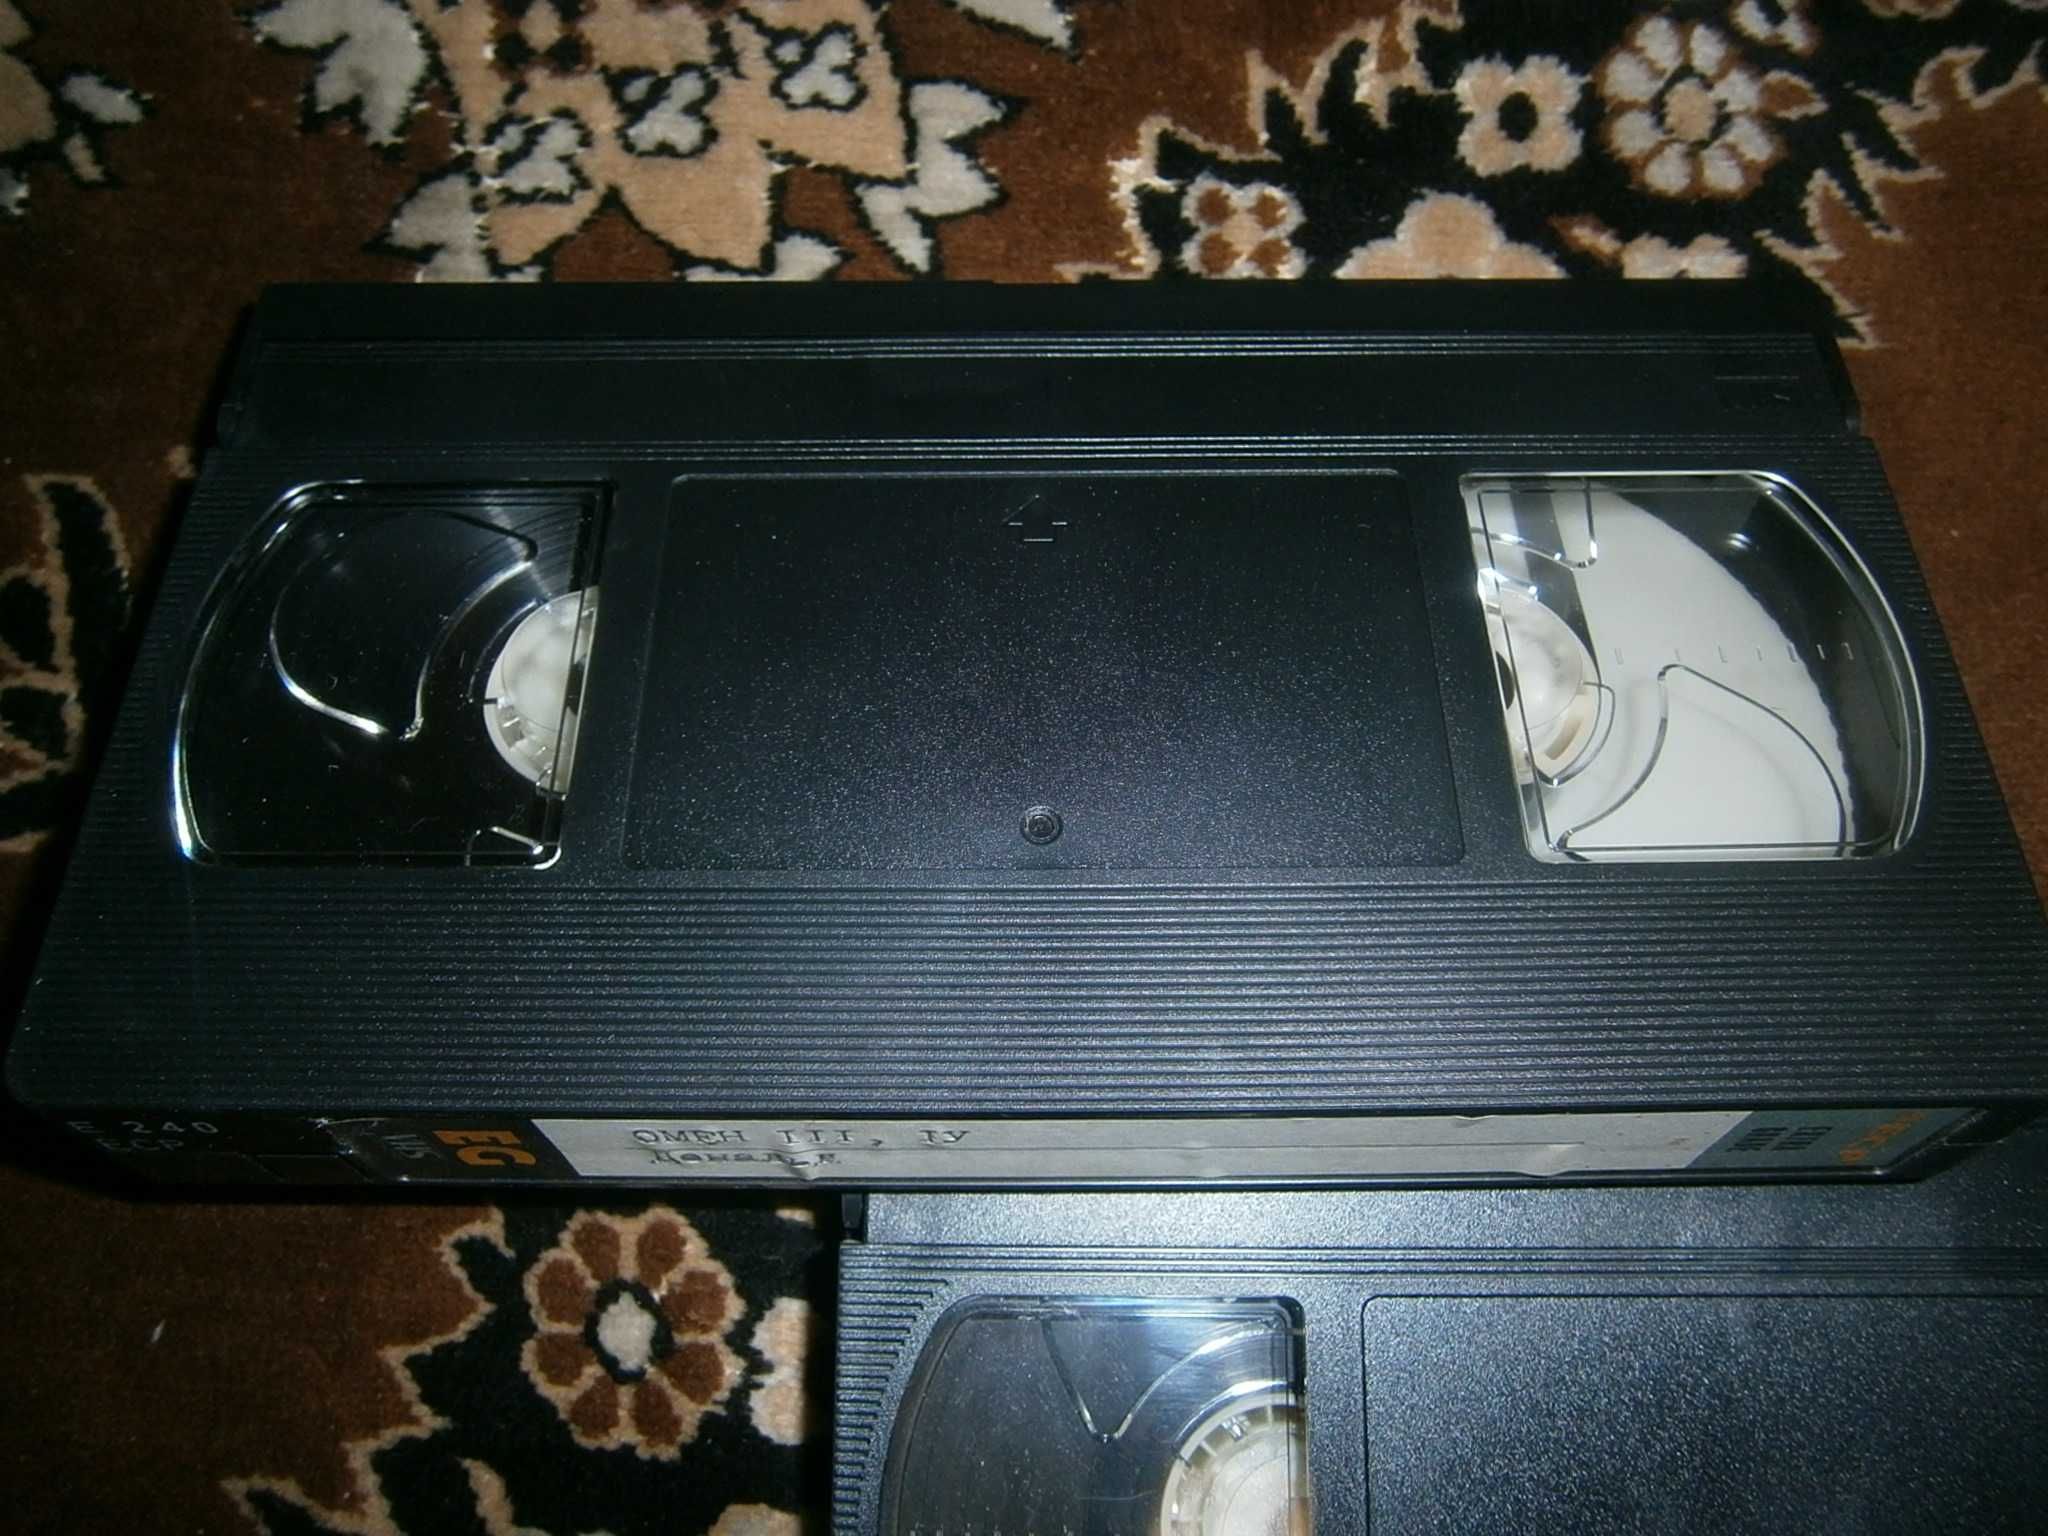 Весь "ОМЕН" 1,2,3,4 (ориг.) на 2-х кас. VHS E 240 + доп. мульт. Диснея